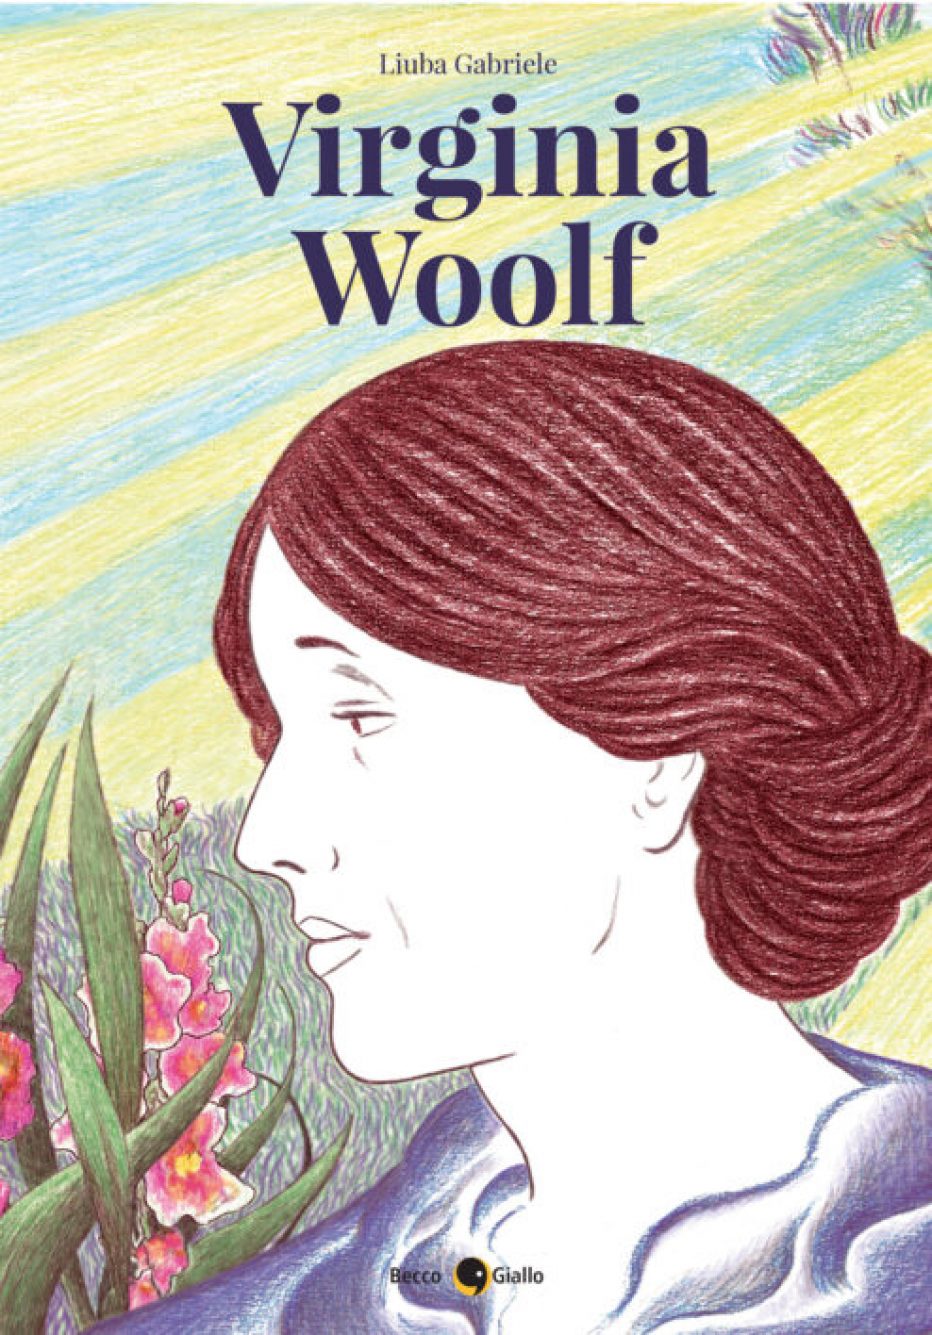 Una graphic novel per Virginia Woolf 